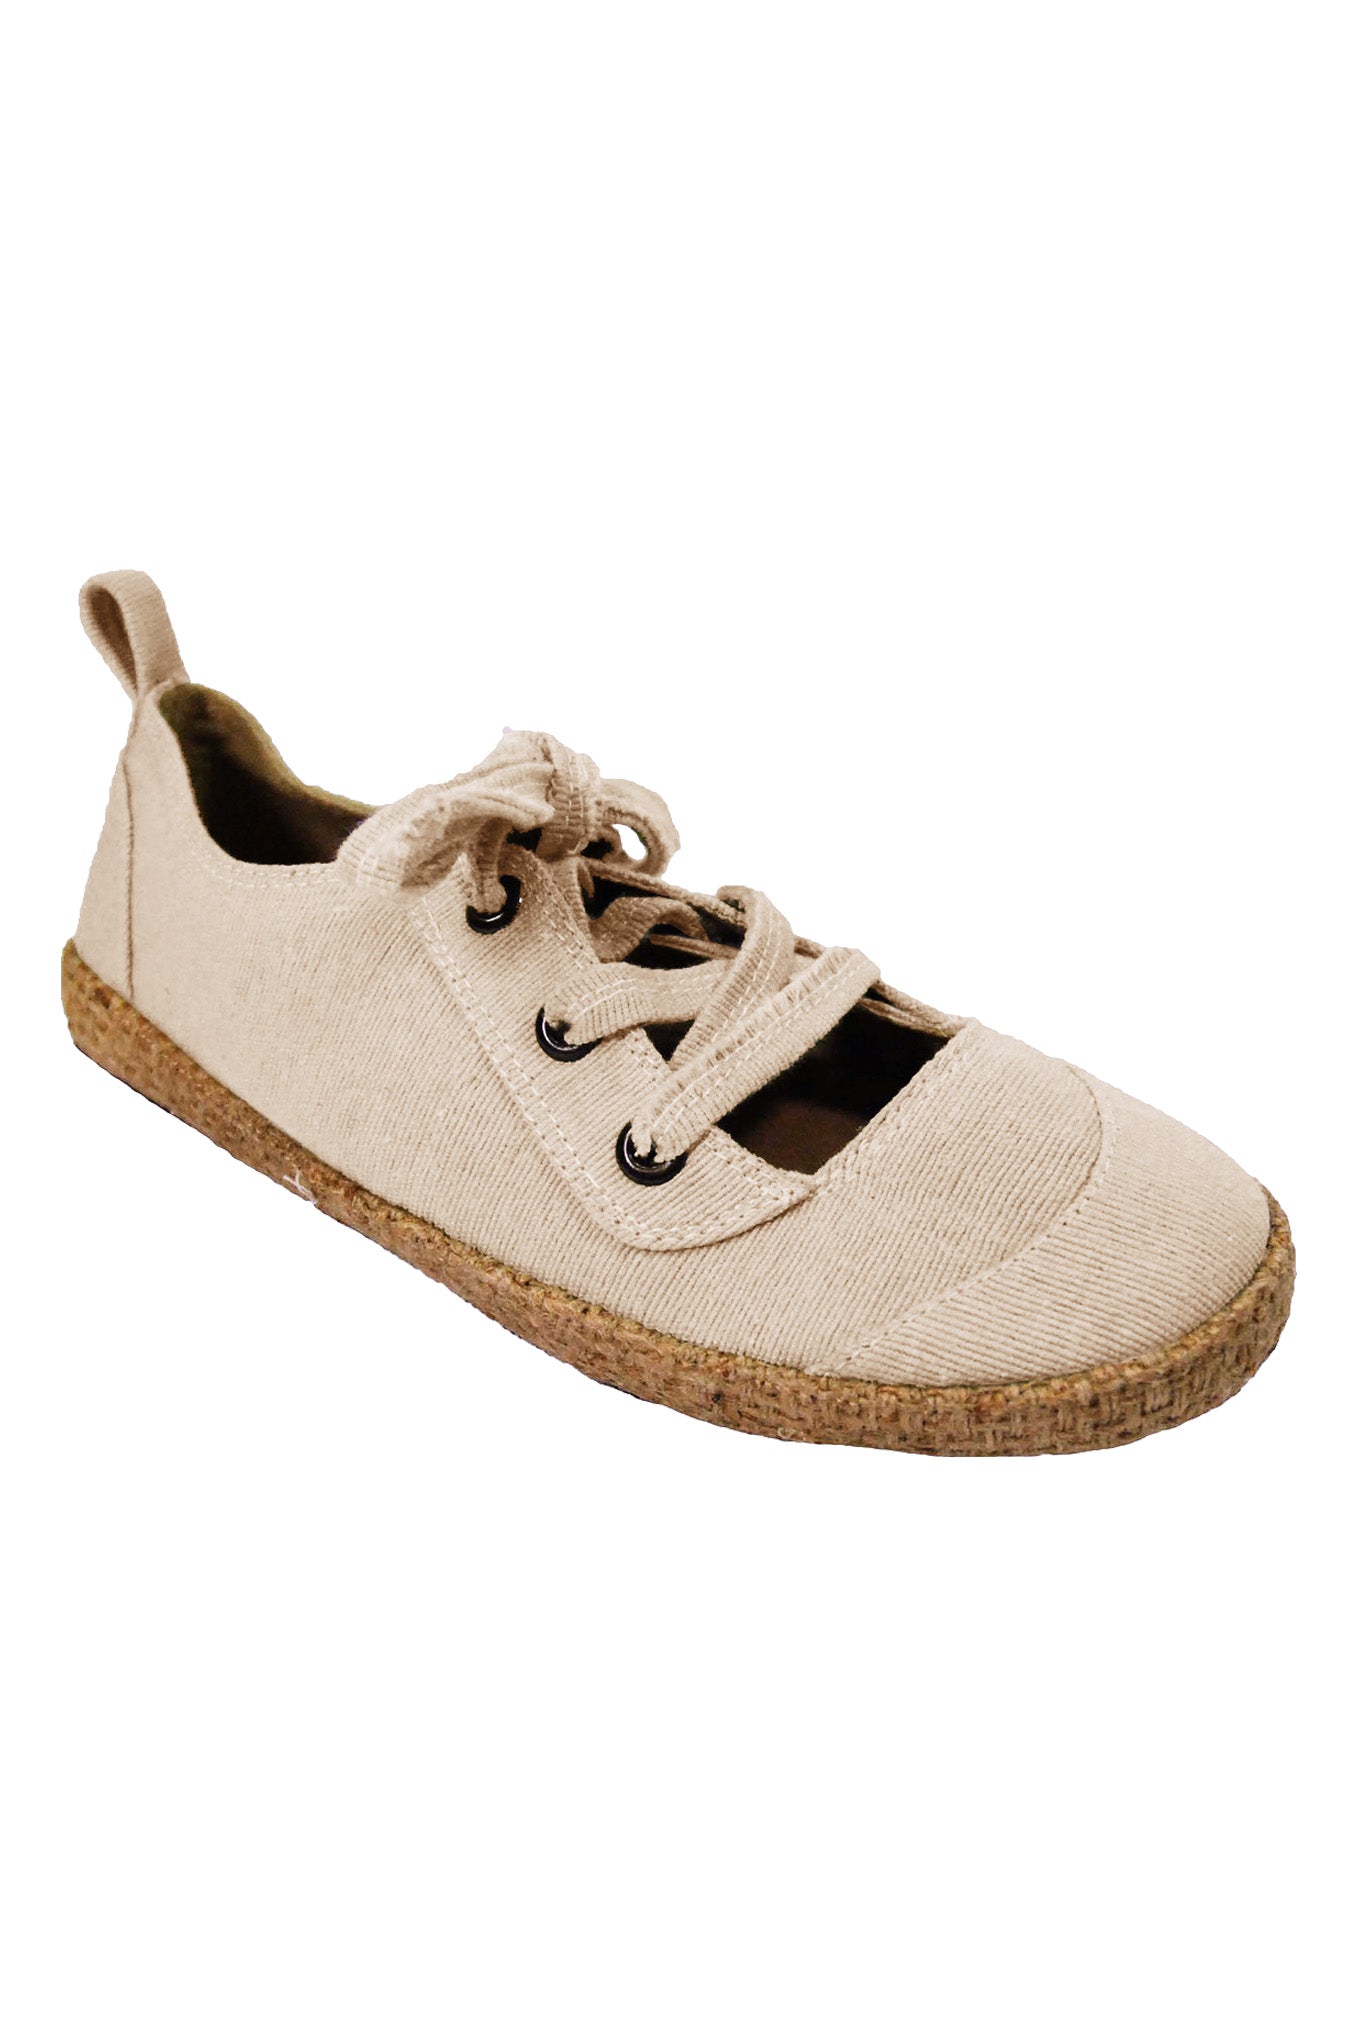 BALI BALLET Shoes - Stone, EURO 41